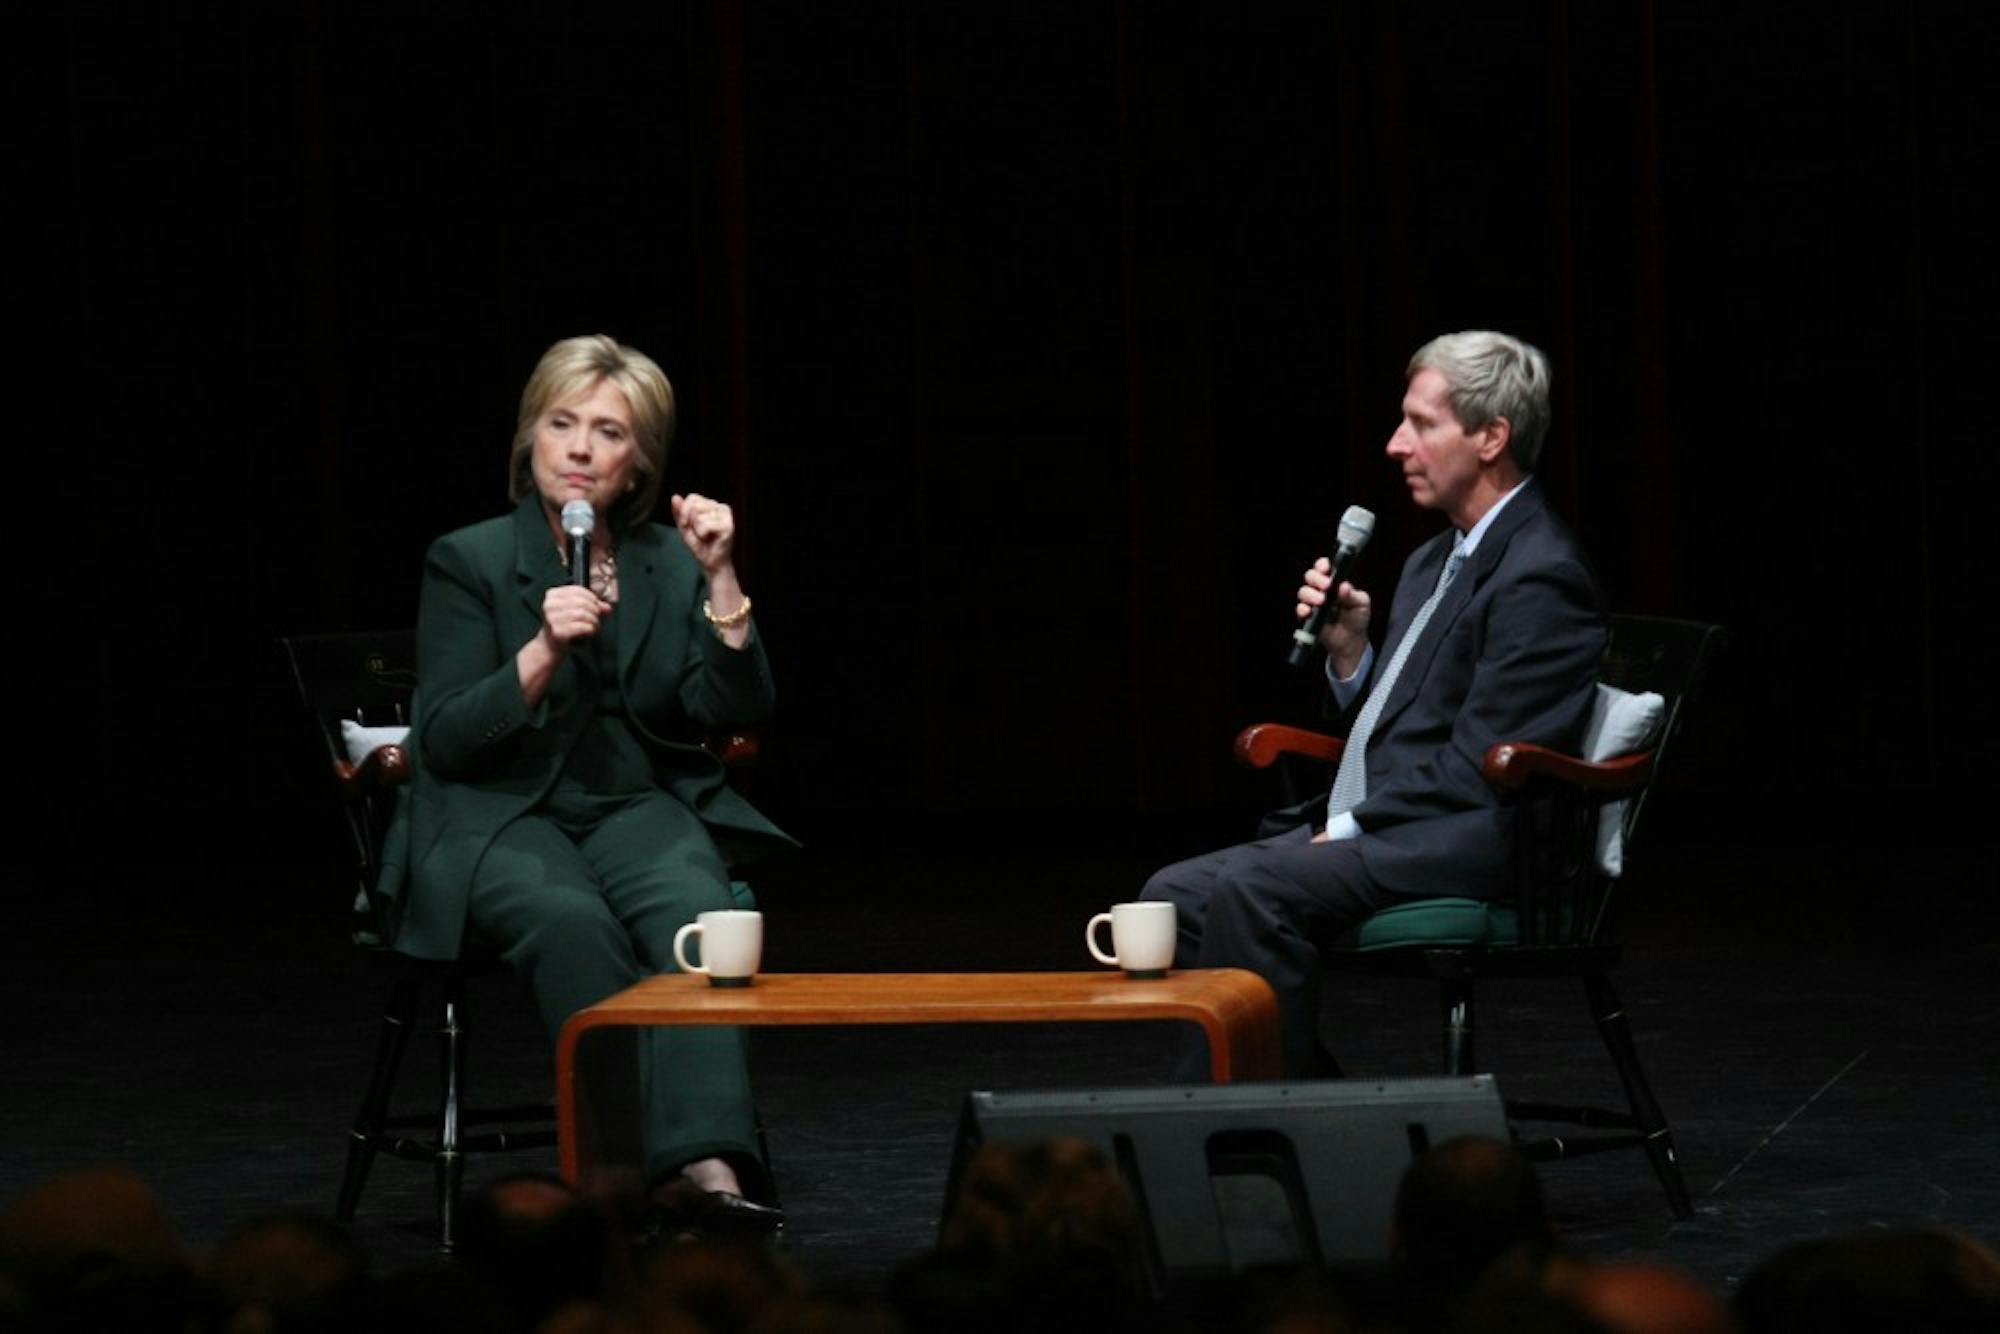 Former N.H. Gov. John Lynch asked Democratic presidential candidate Hillary Clinton questions. 